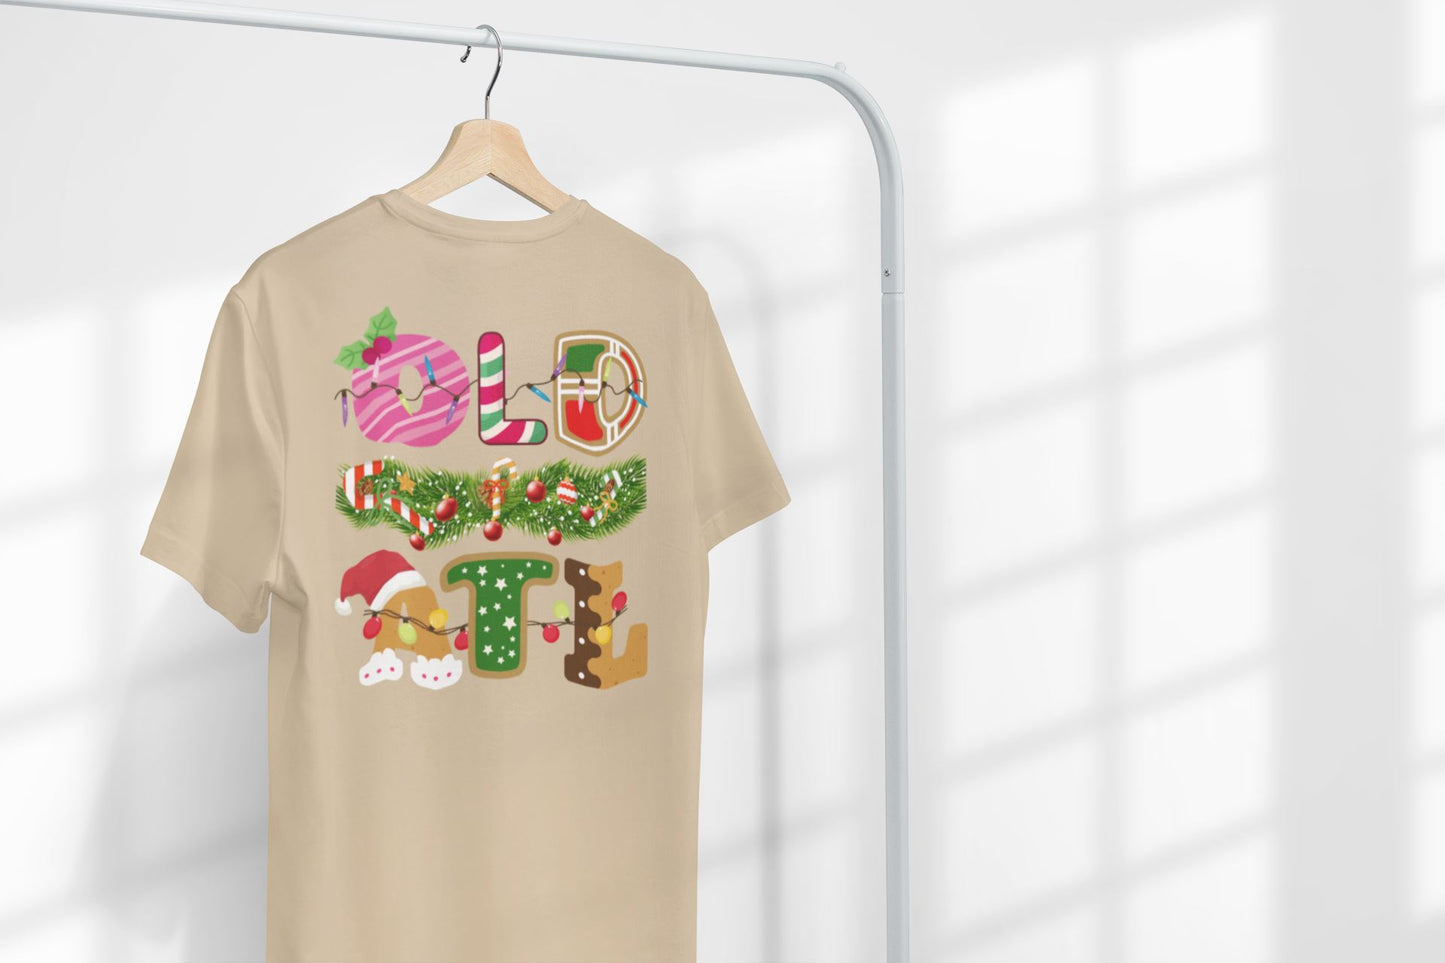 OLD ATL Holiday T-Shirt (Ugly Christmas Shirt) B1ack By Design LLC 